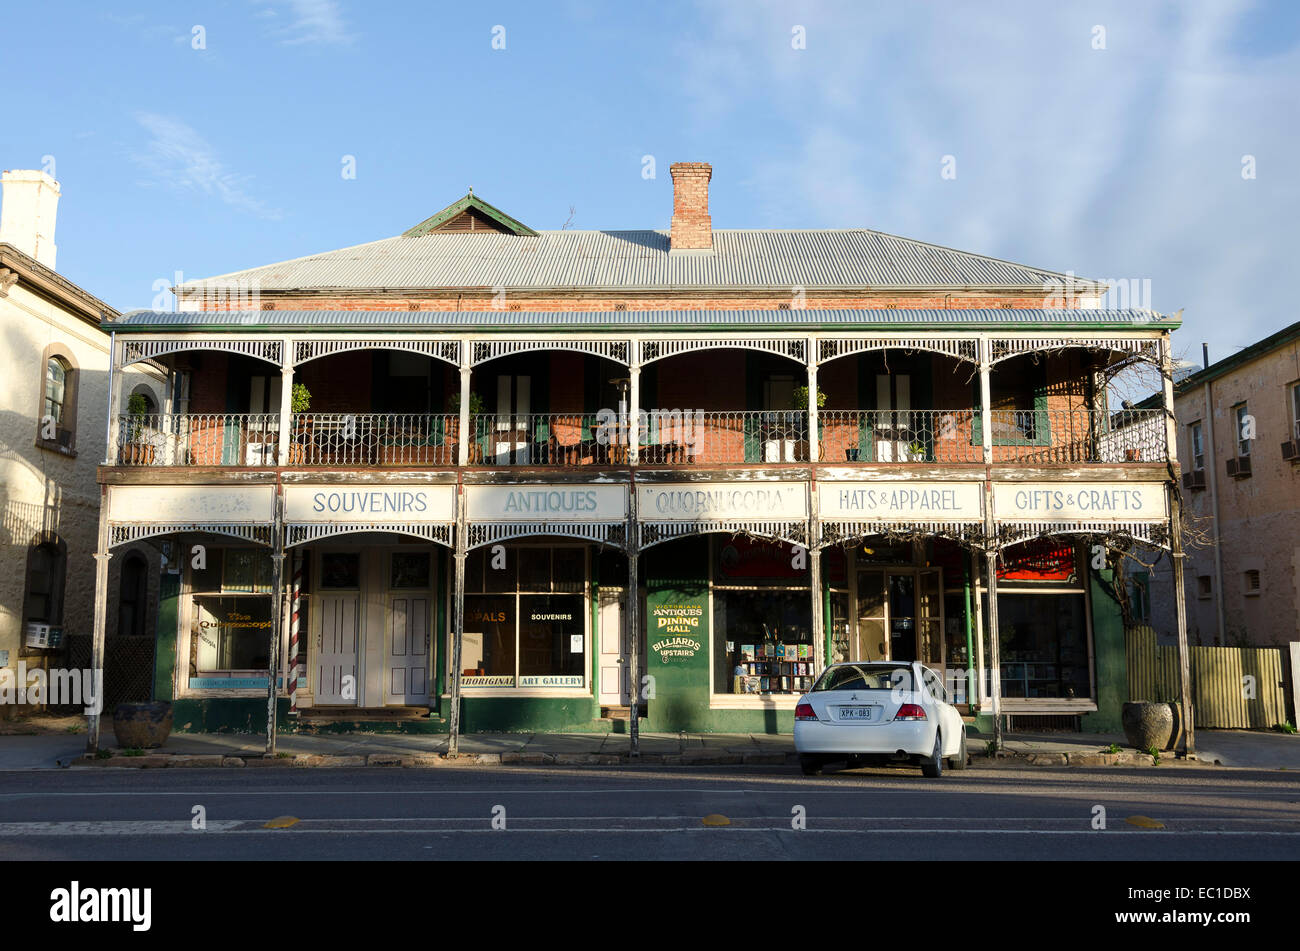 Old Hotel, souvenir and antiques shop, Quorn, South Australia Stock Photo